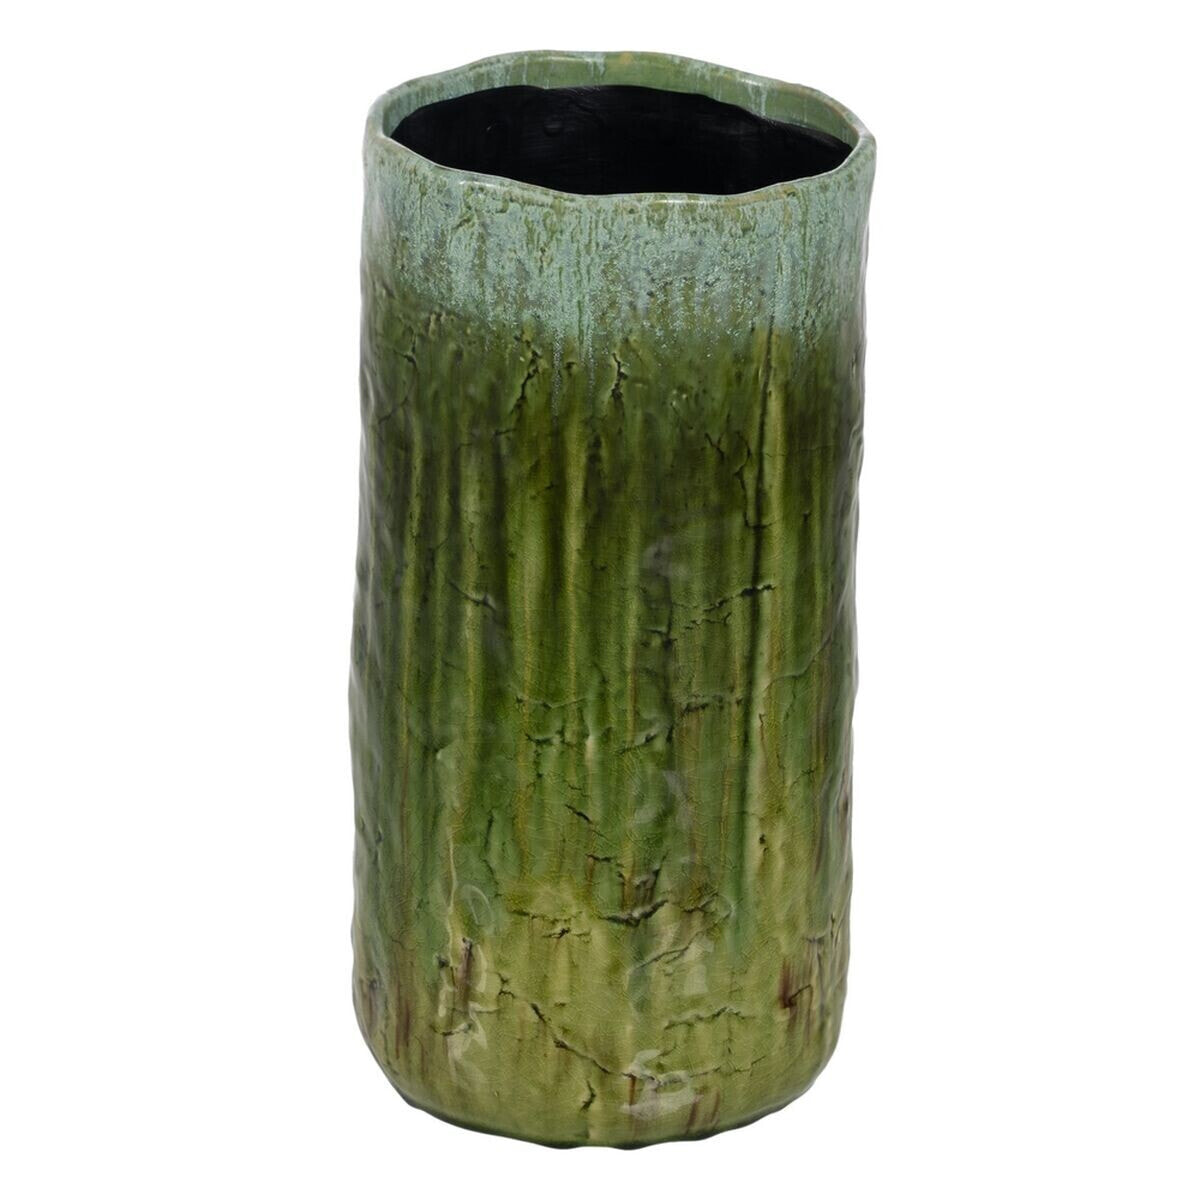 Vase Green Ceramic 21 x 21 x 41 cm